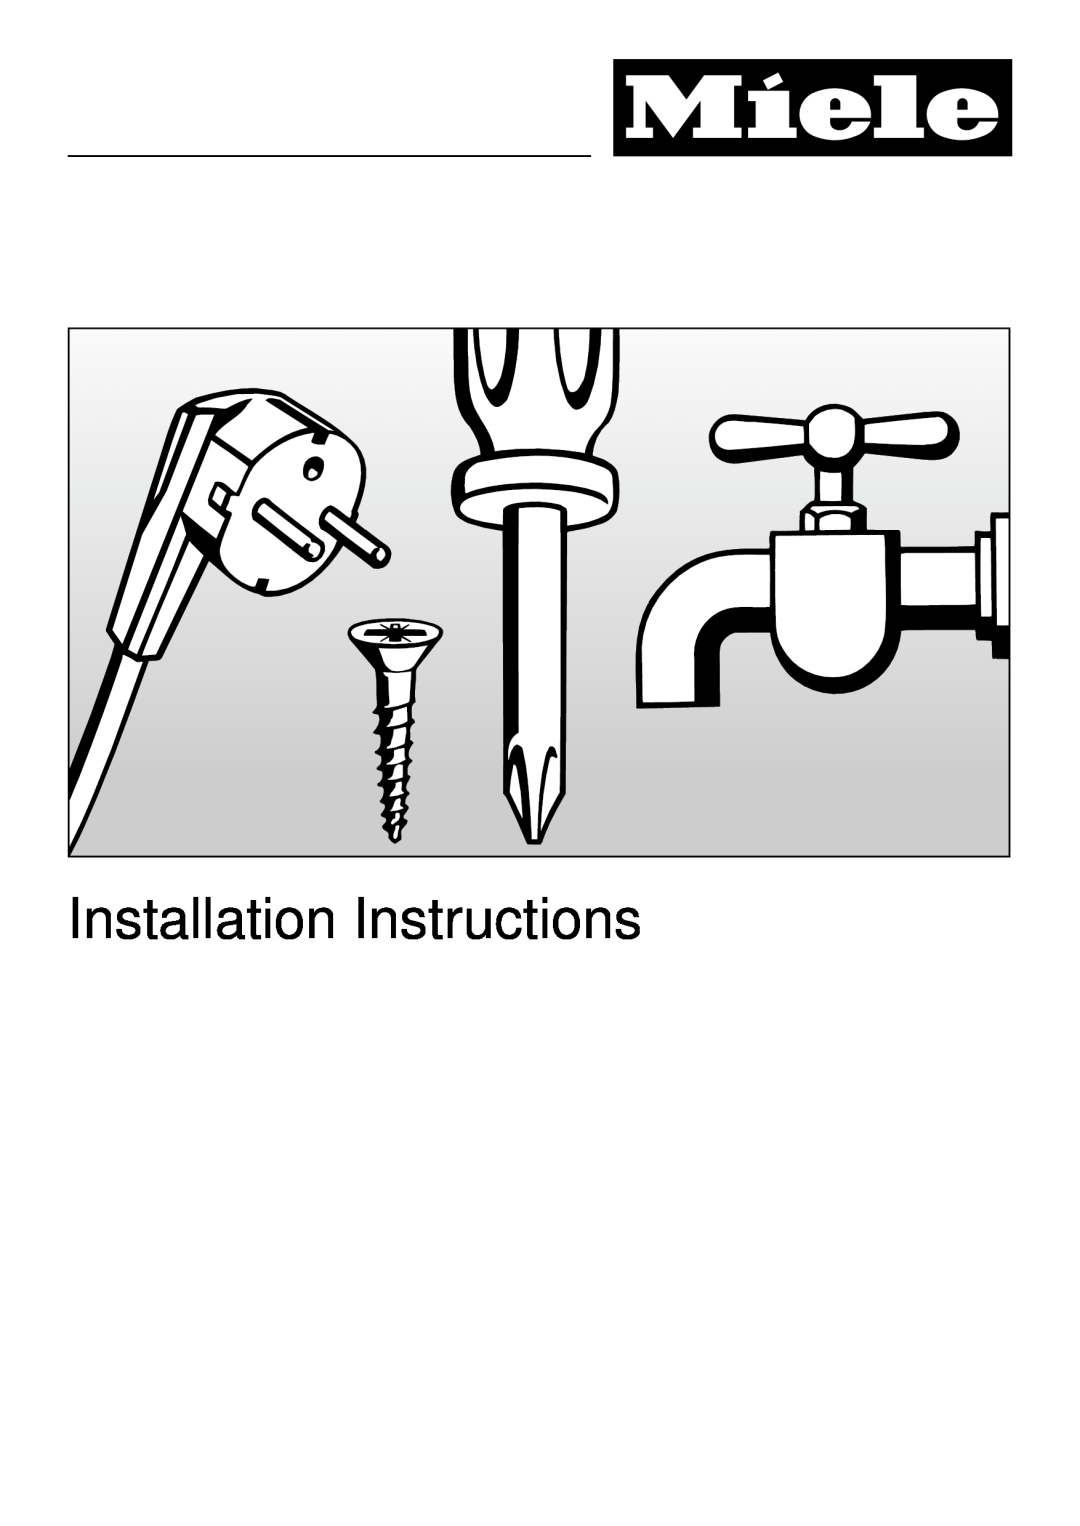 Miele DA270 installation instructions Installation Instructions 